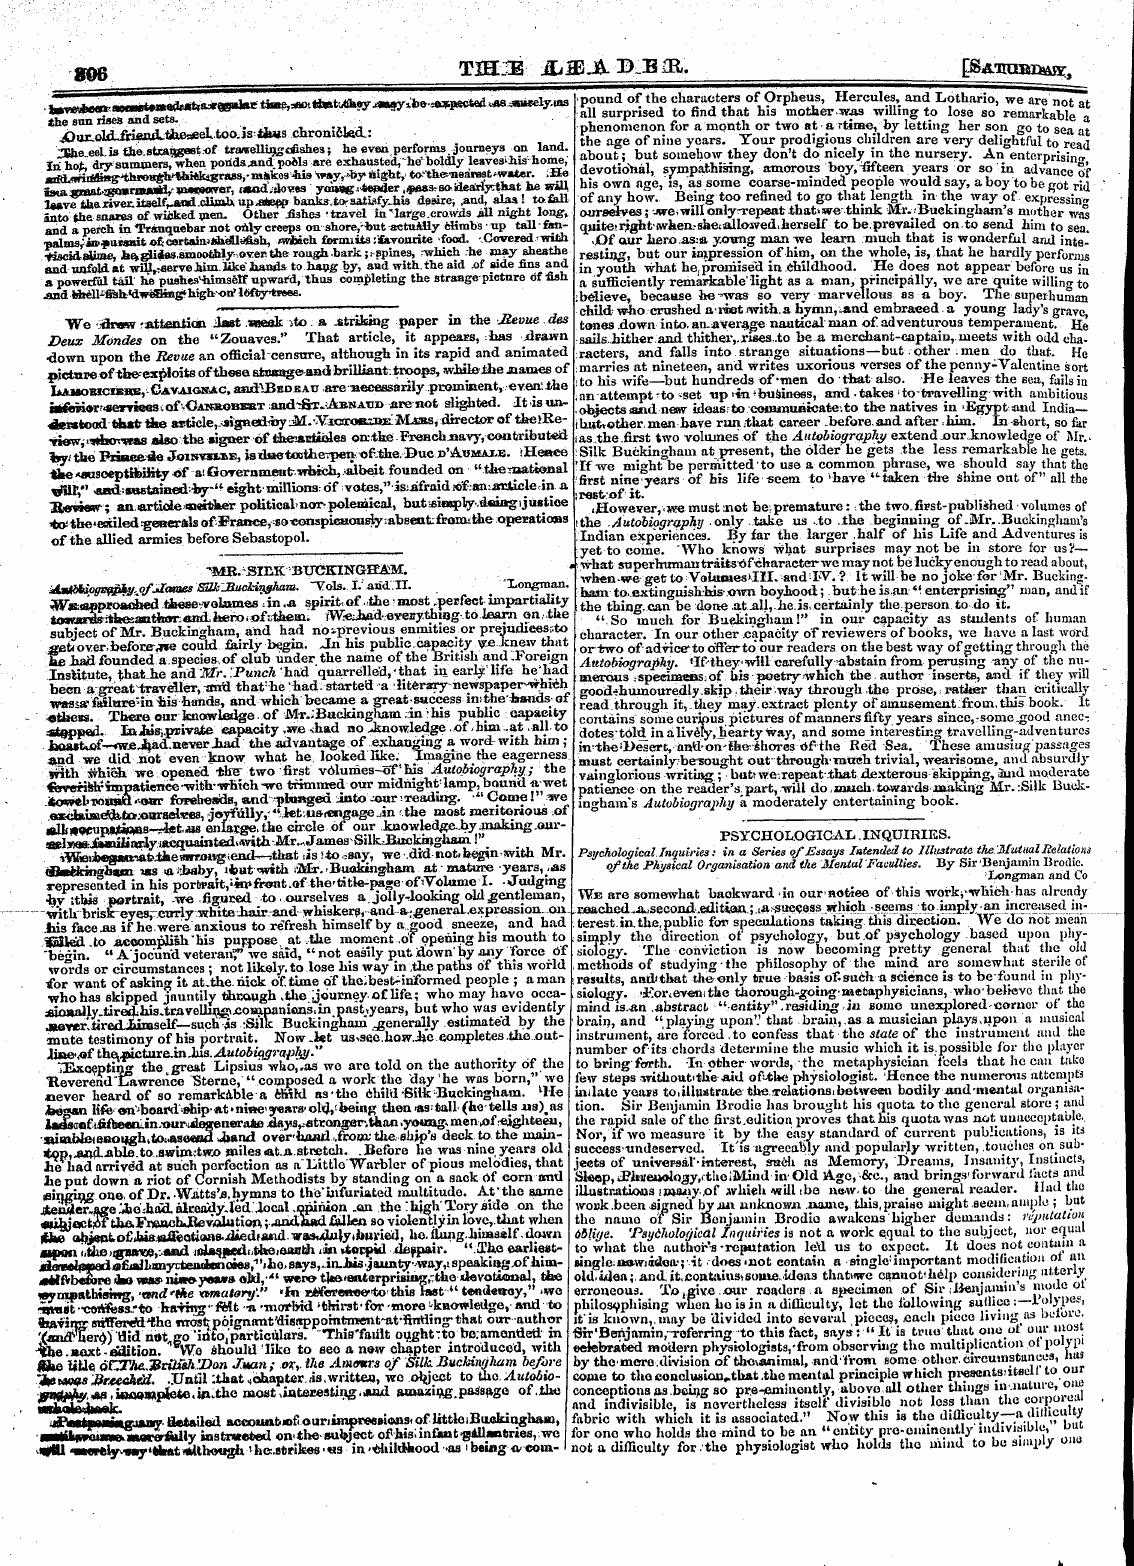 Leader (1850-1860): jS F Y, 2nd edition - ^Mb. Siek Bxtokingh^M. Y^M^Ogv^Y^F^Imes ...